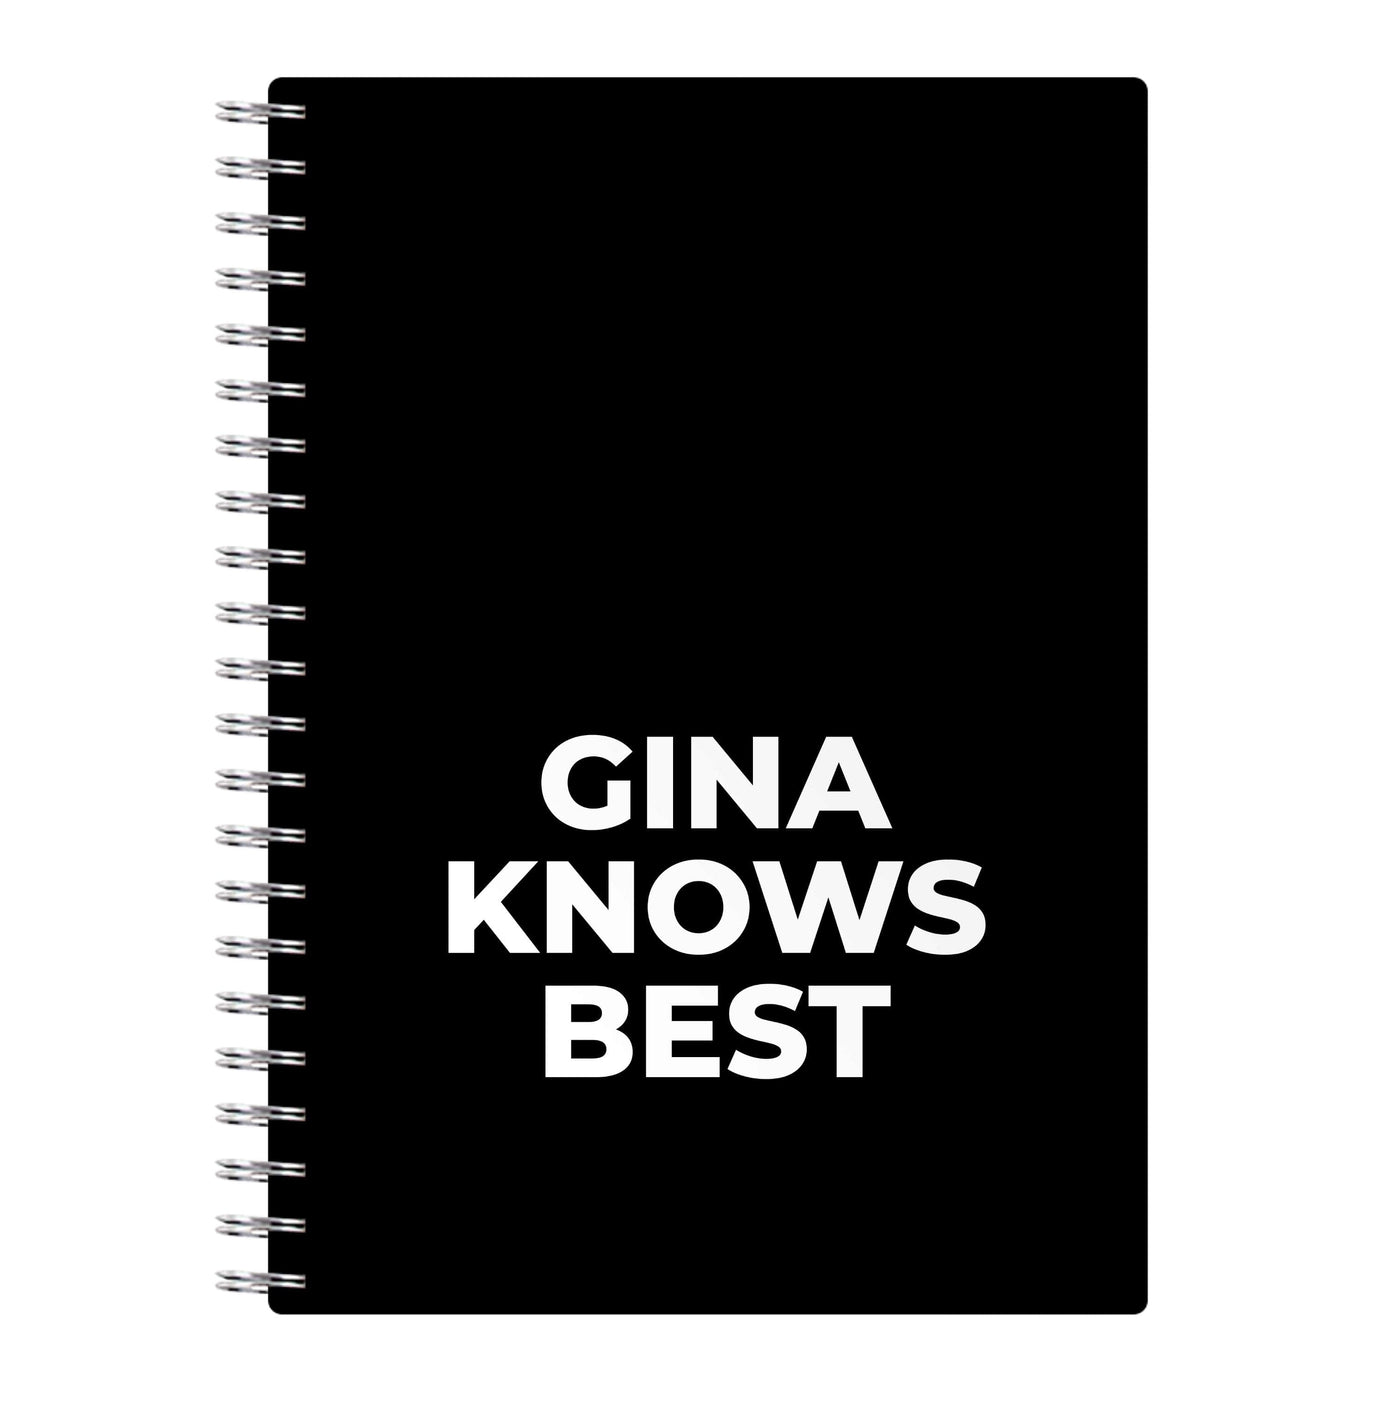 Gina Knows Best - Brooklyn Nine-Nine Notebook